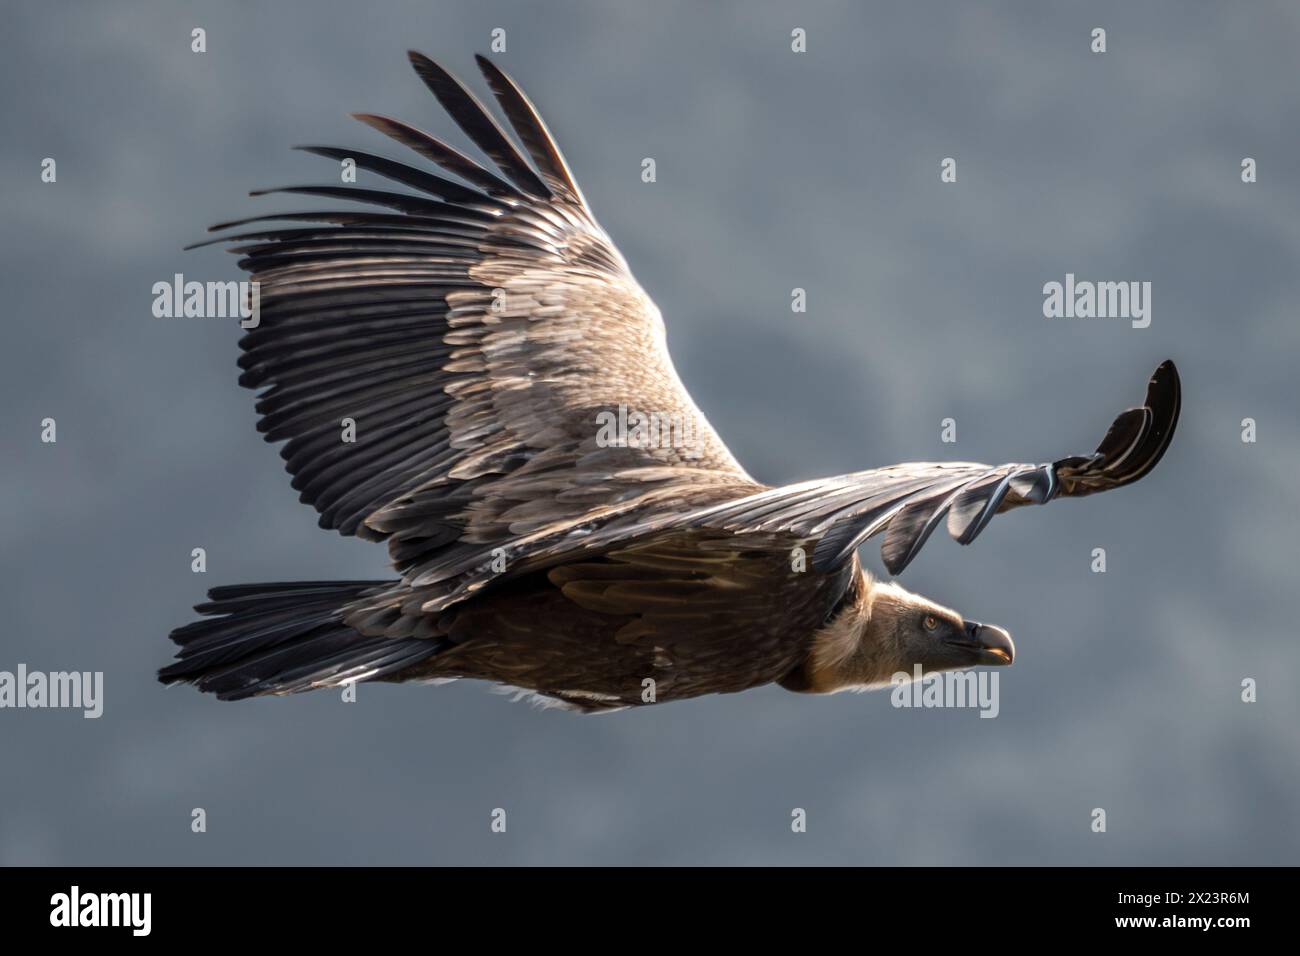 Eurasian griffon vulture, Parque Nacional de Monfragüe, Spain Stock Photo